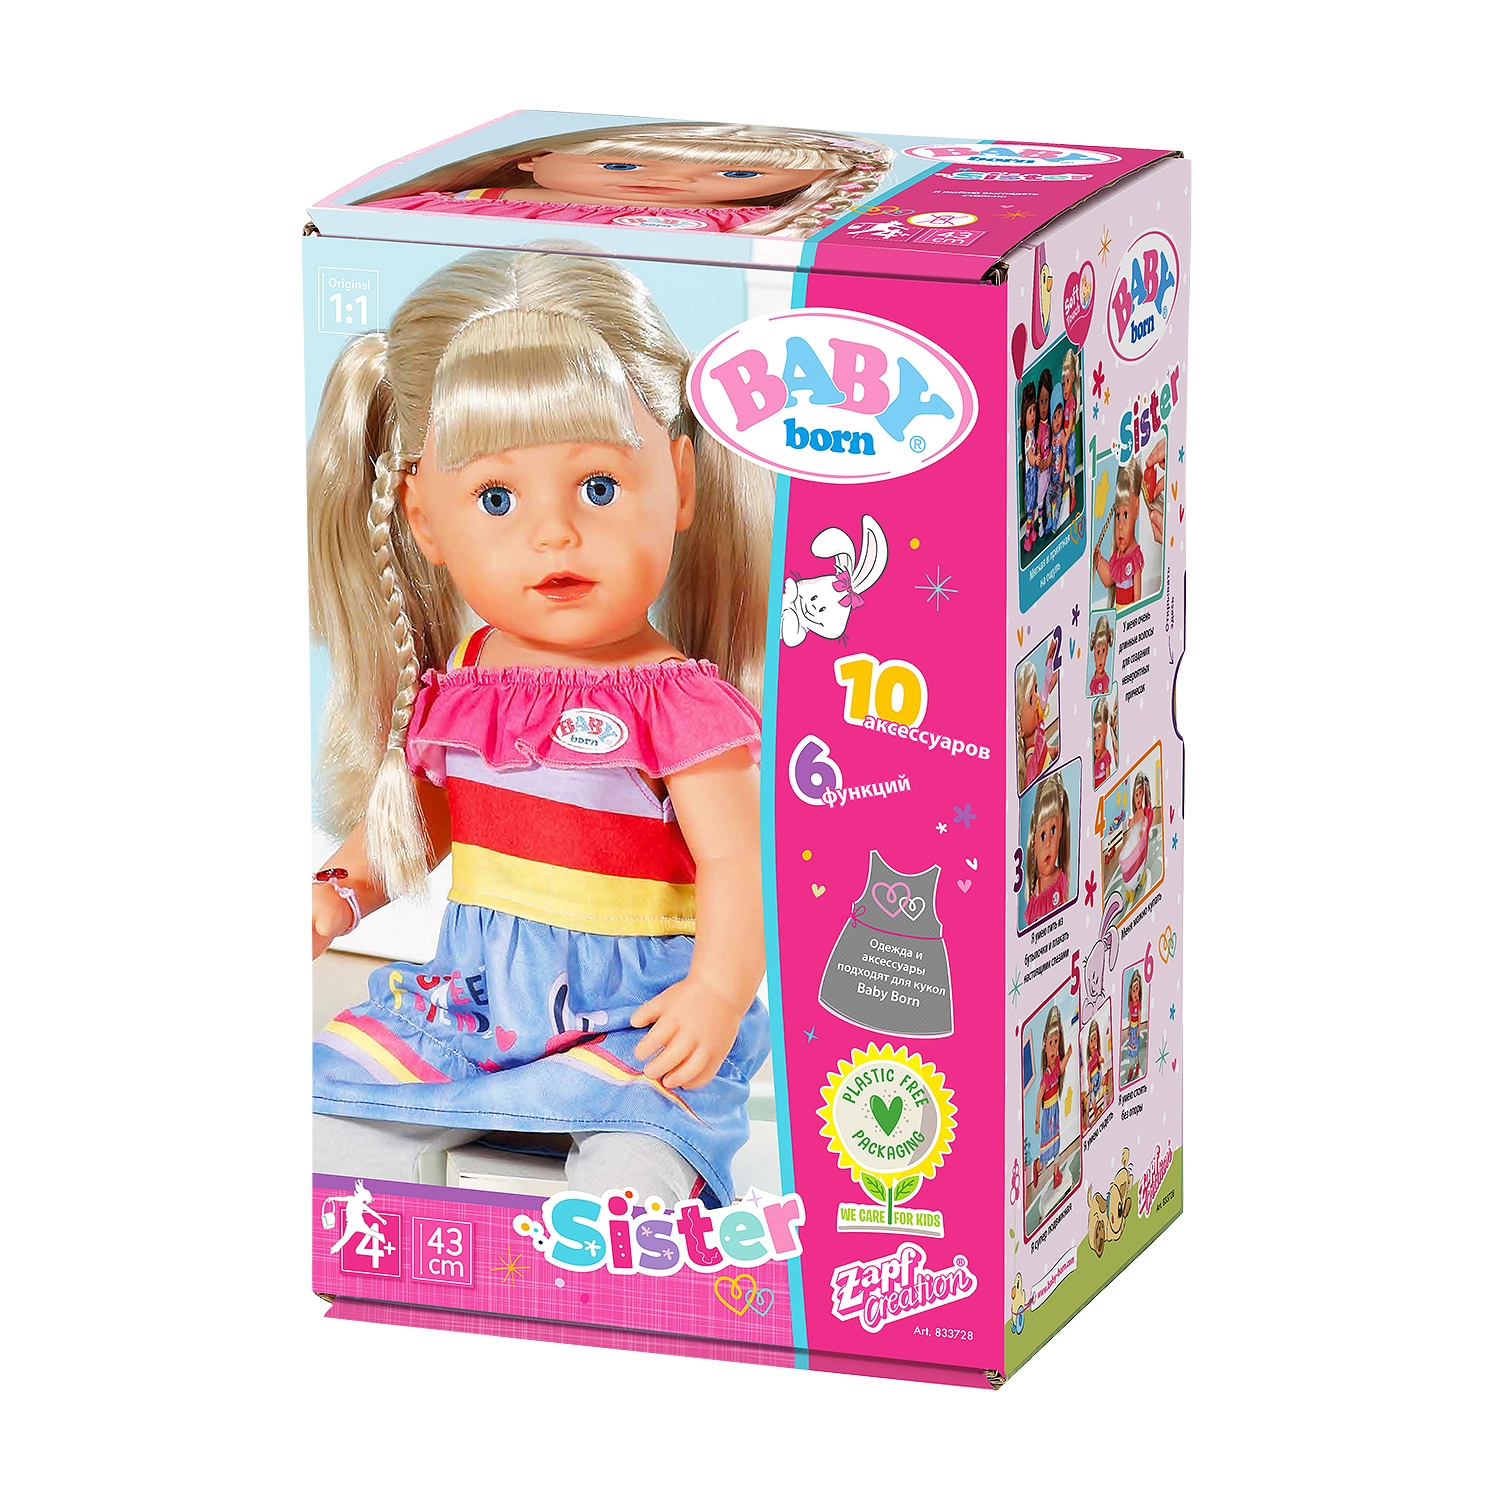 Интерактивная кукла Zapf Creation BABY born, Сестричка 43 см, аксессуары, 41027